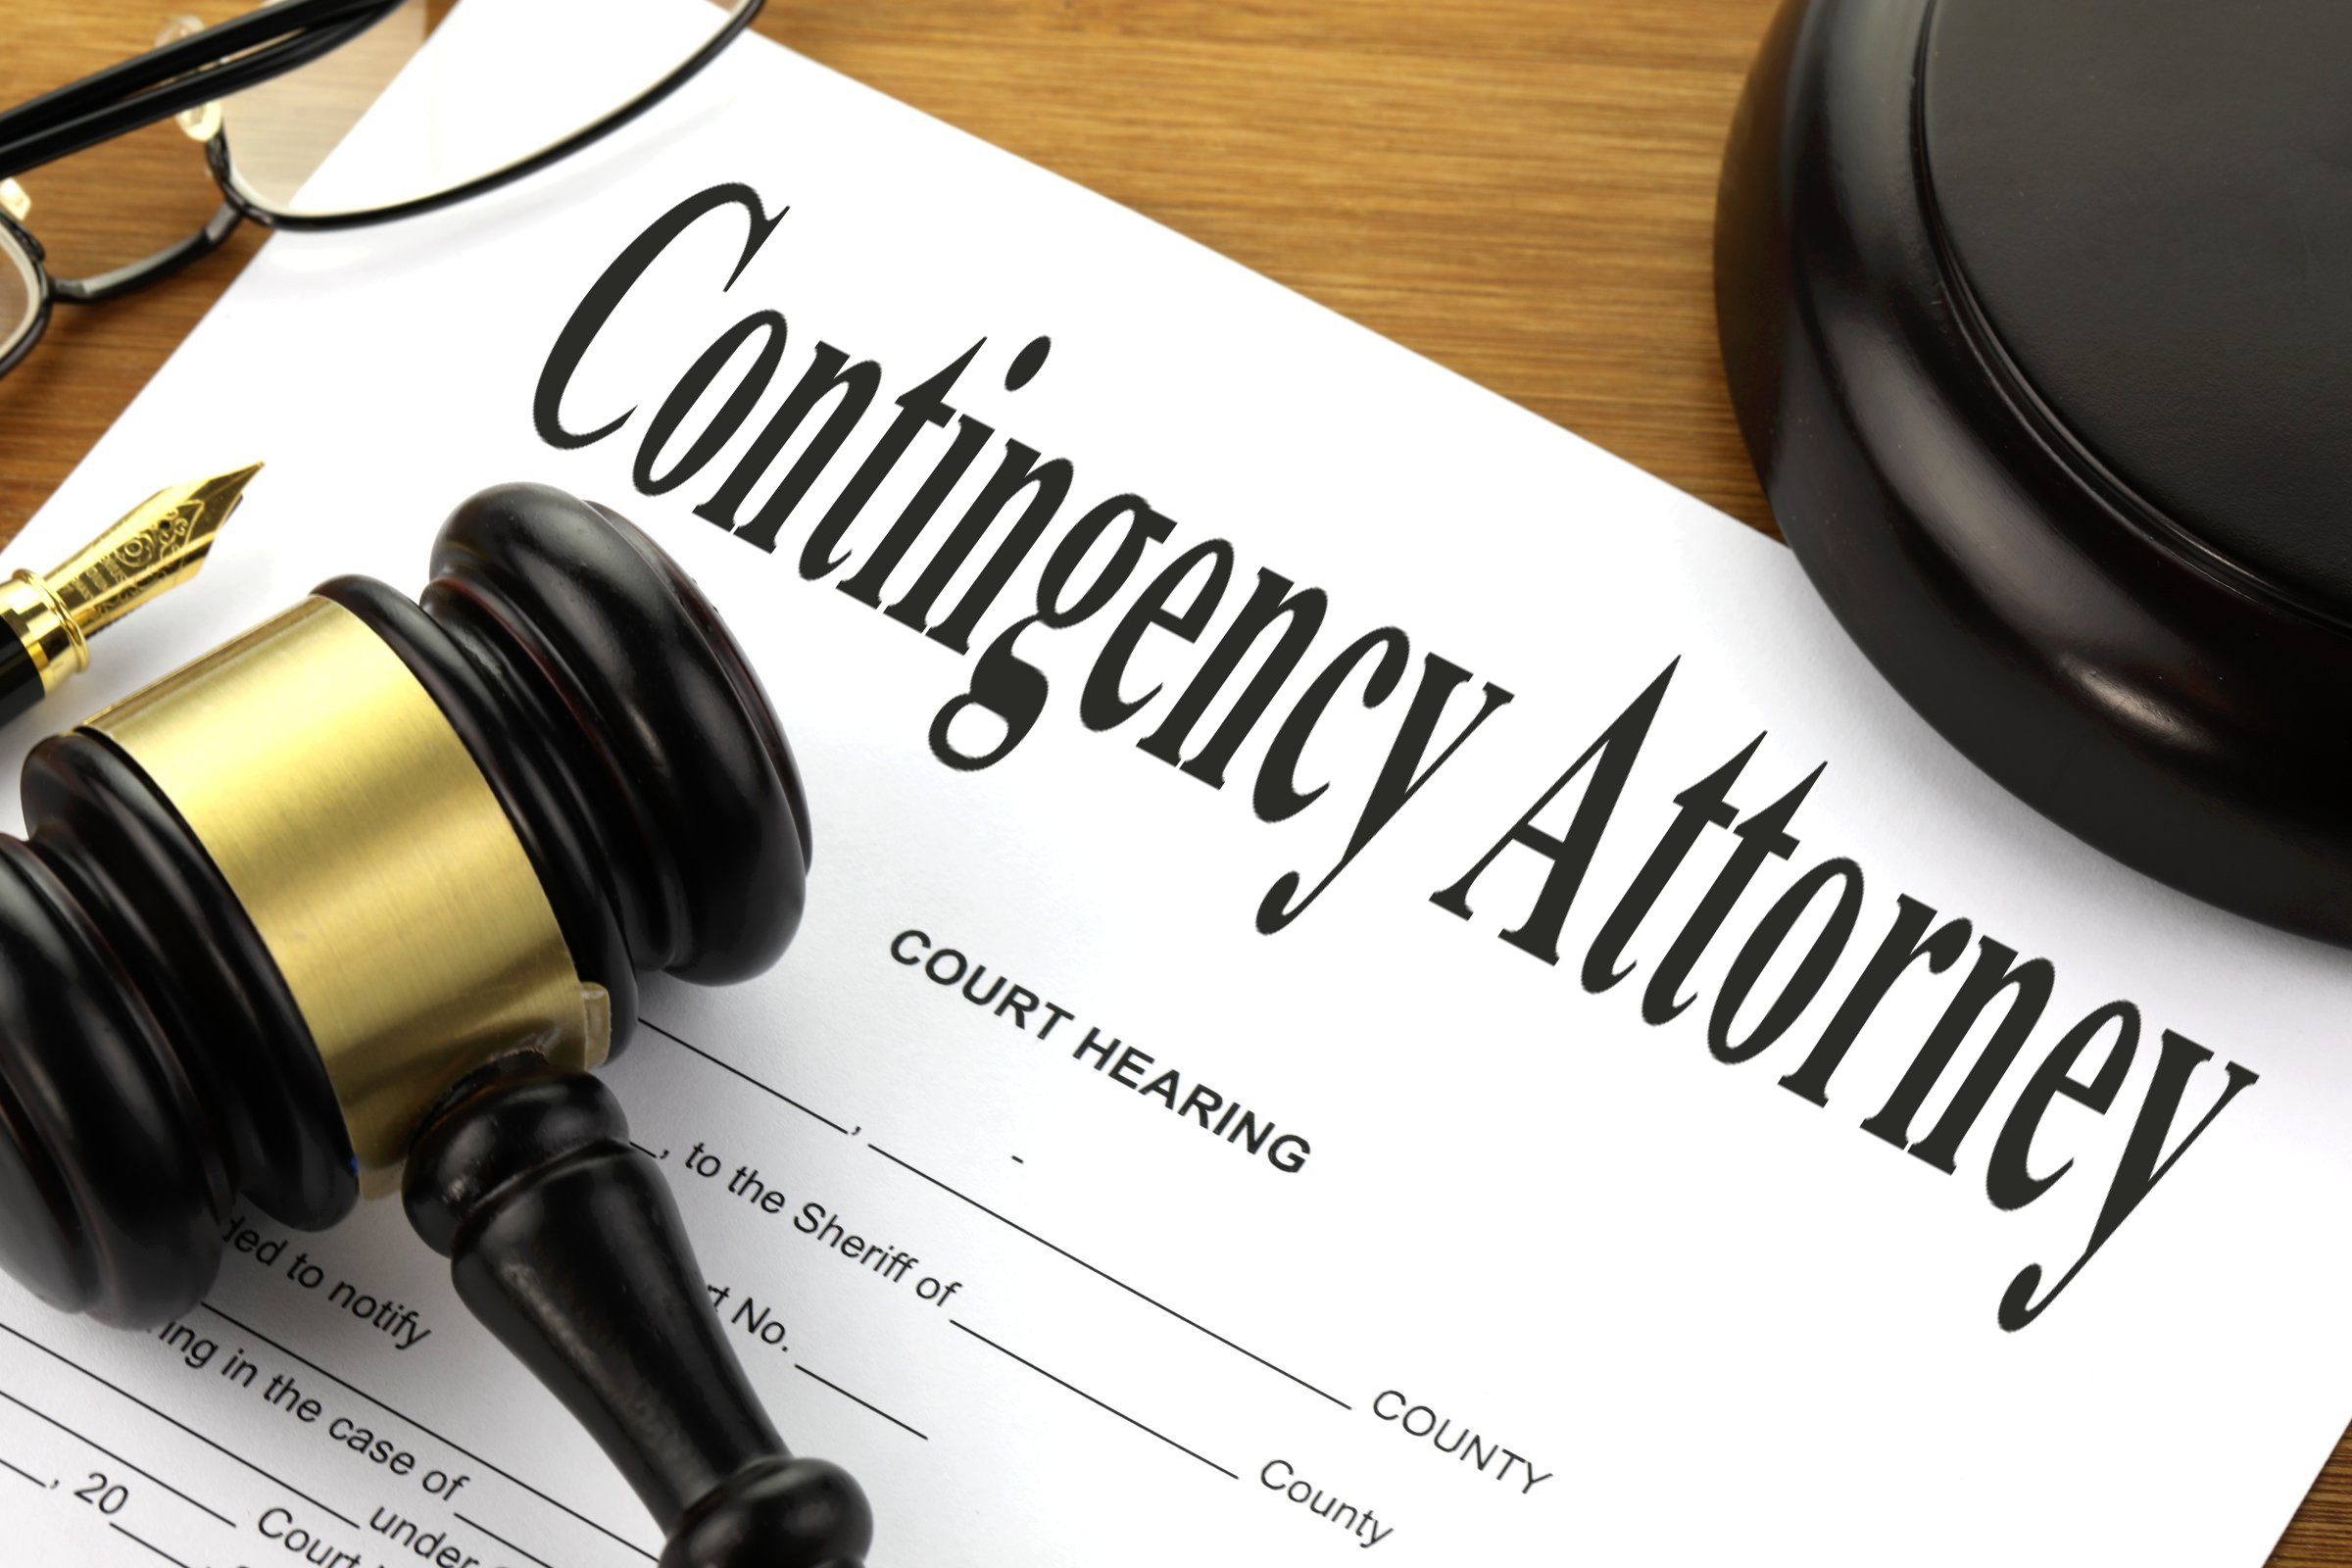 contingency attorney